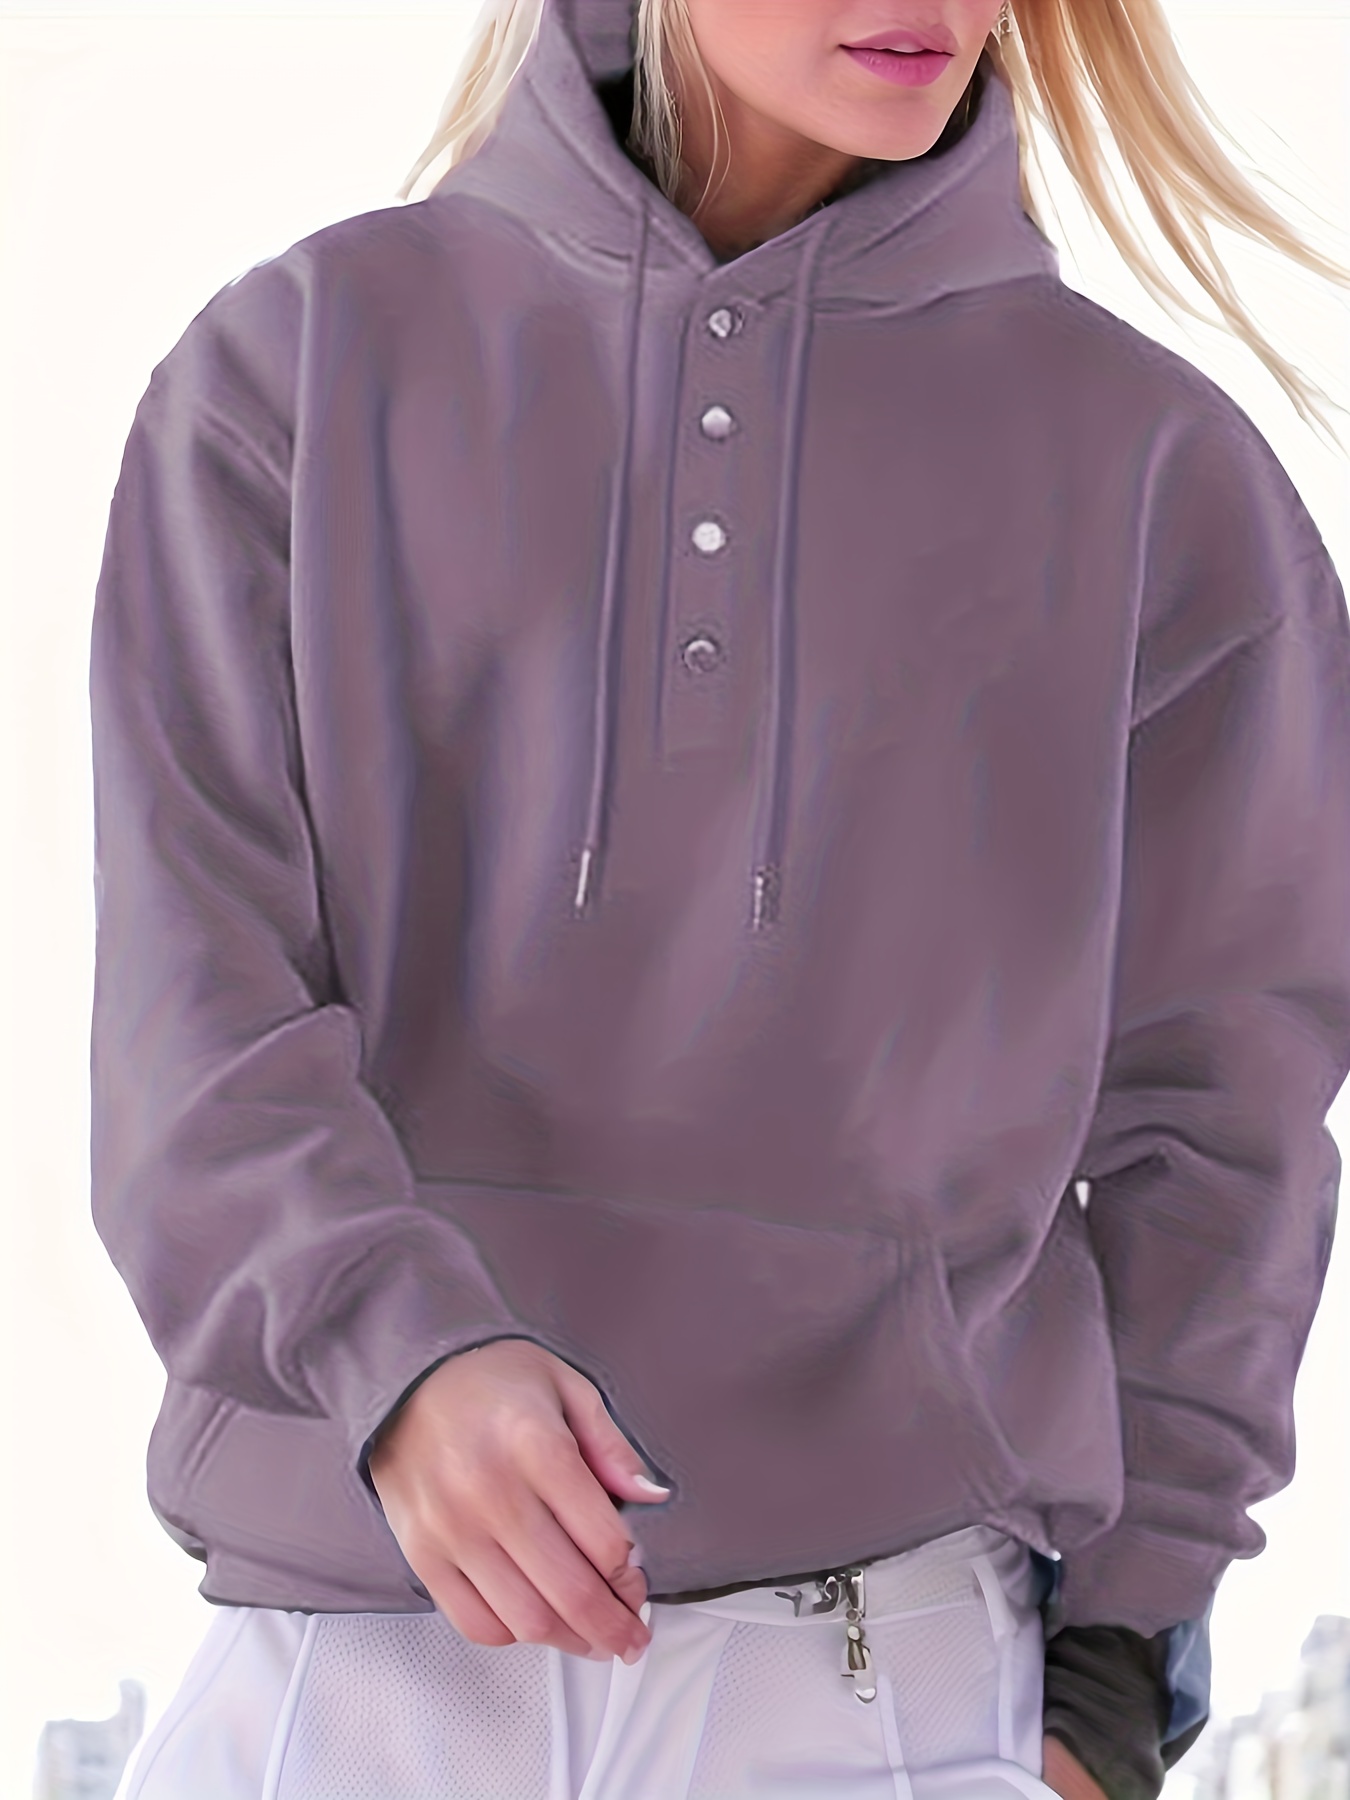  Ruziyoog Women's Cotton Linen Hoodies Casual Long Sleeve  Drawstring Hooded Sweatshirt Button Lightweight Jacket with Pocket Purple :  Sports & Outdoors